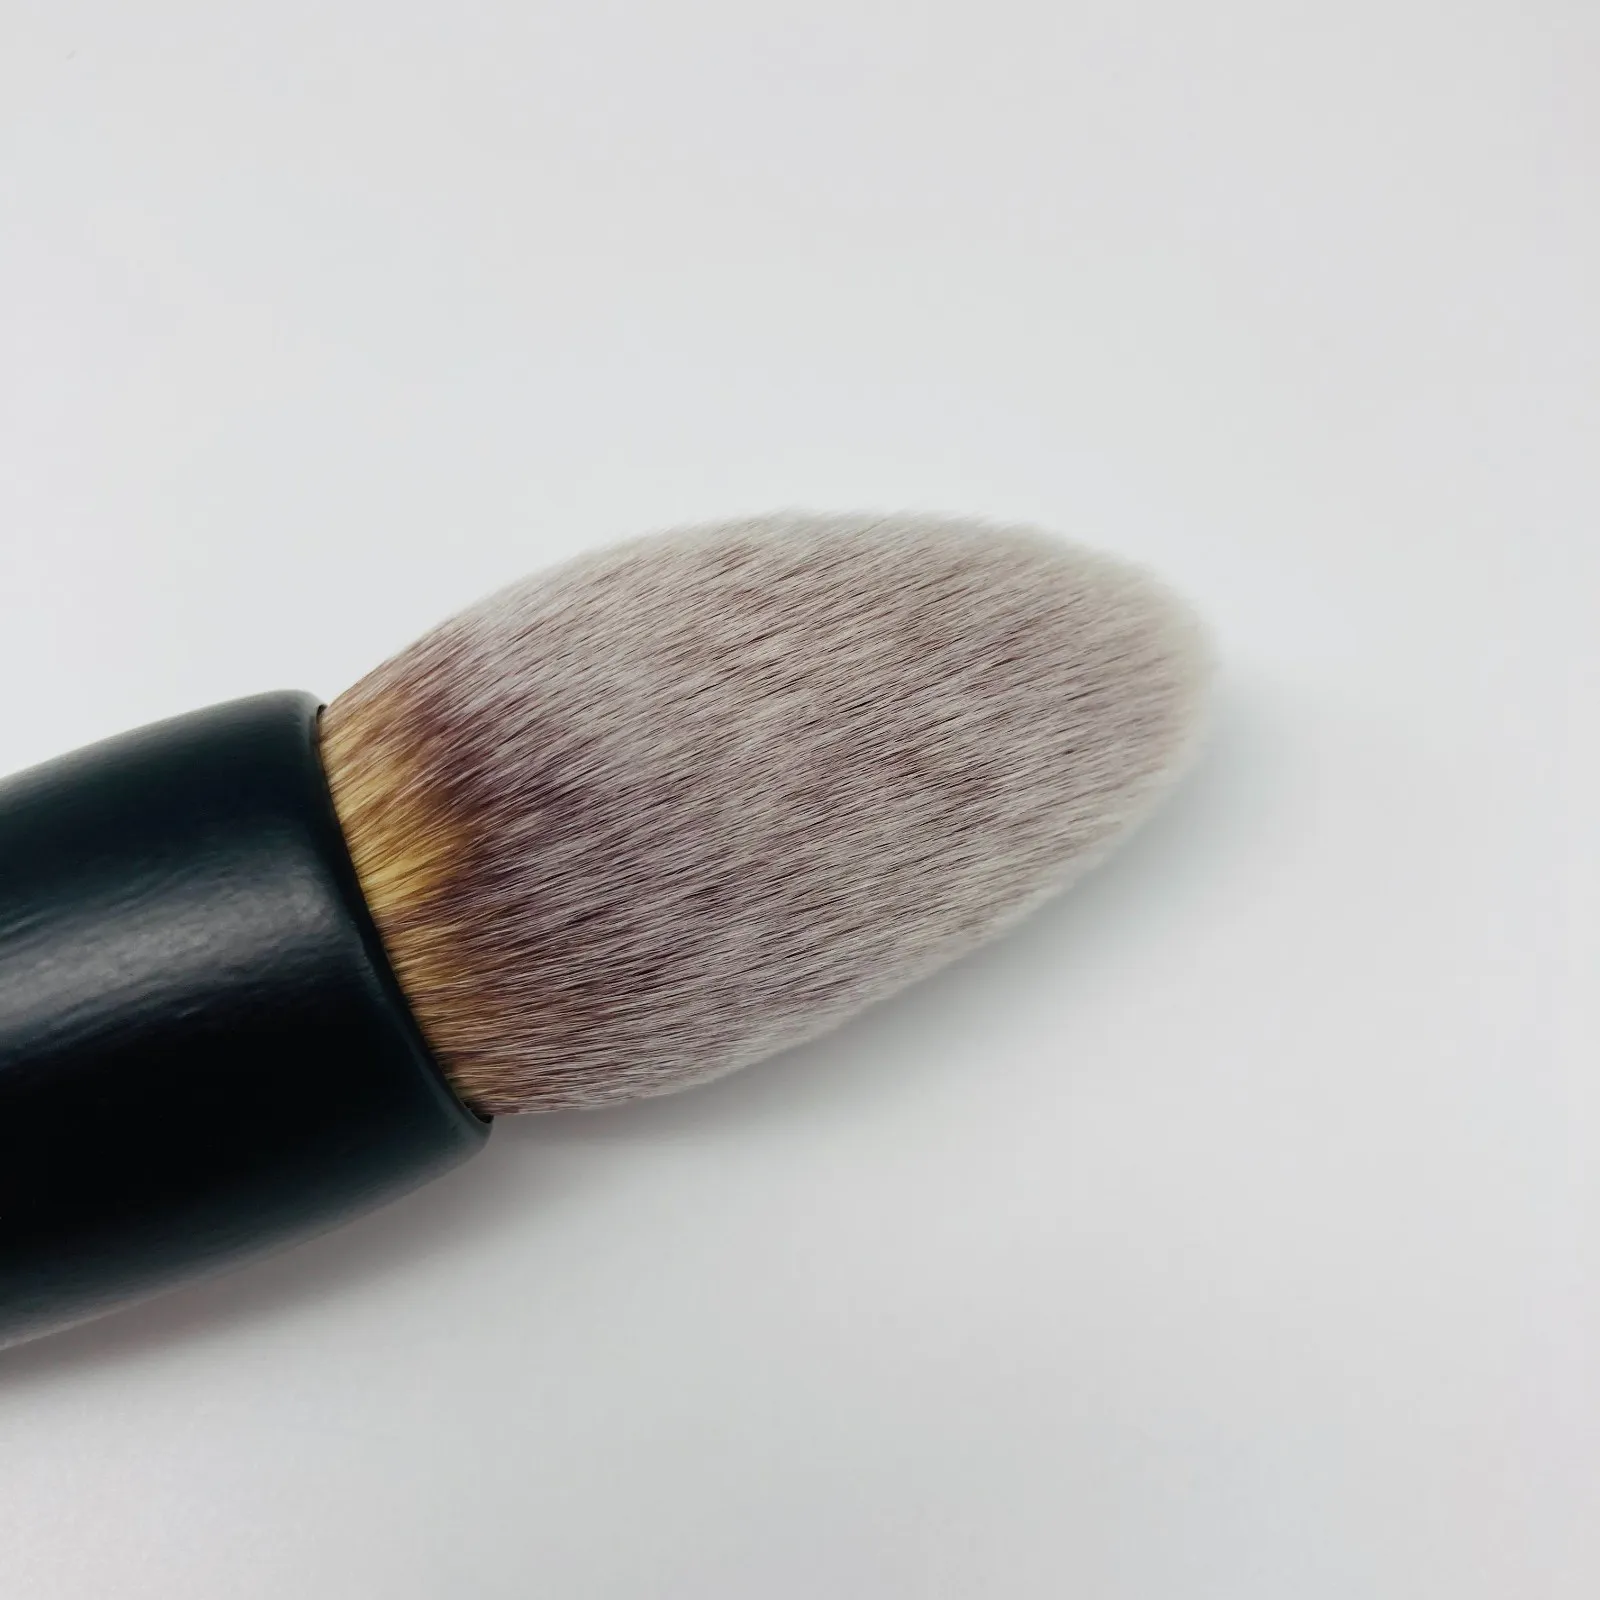 Suprabeauty brush makeup brushes manufacturer on sale